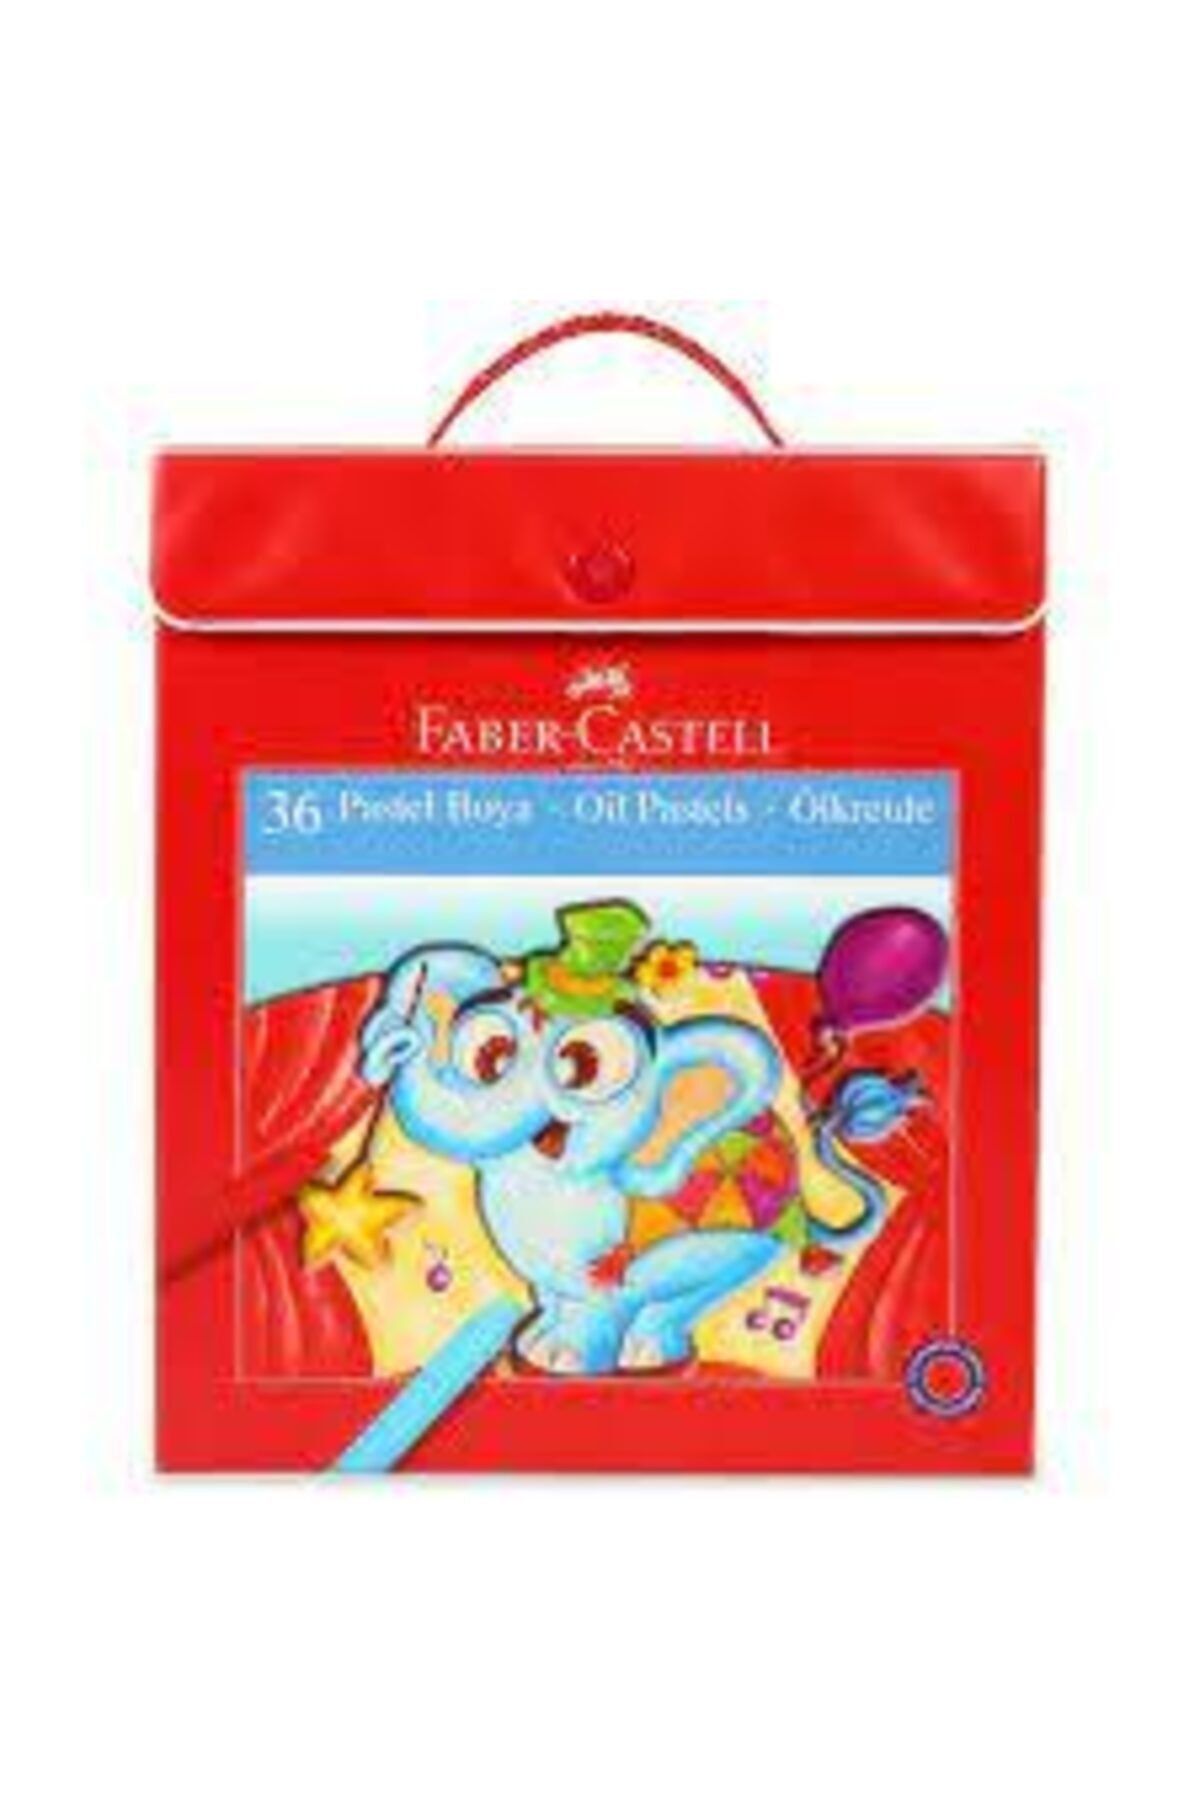 Faber Castell Faber-castell 36 Pastel Boya